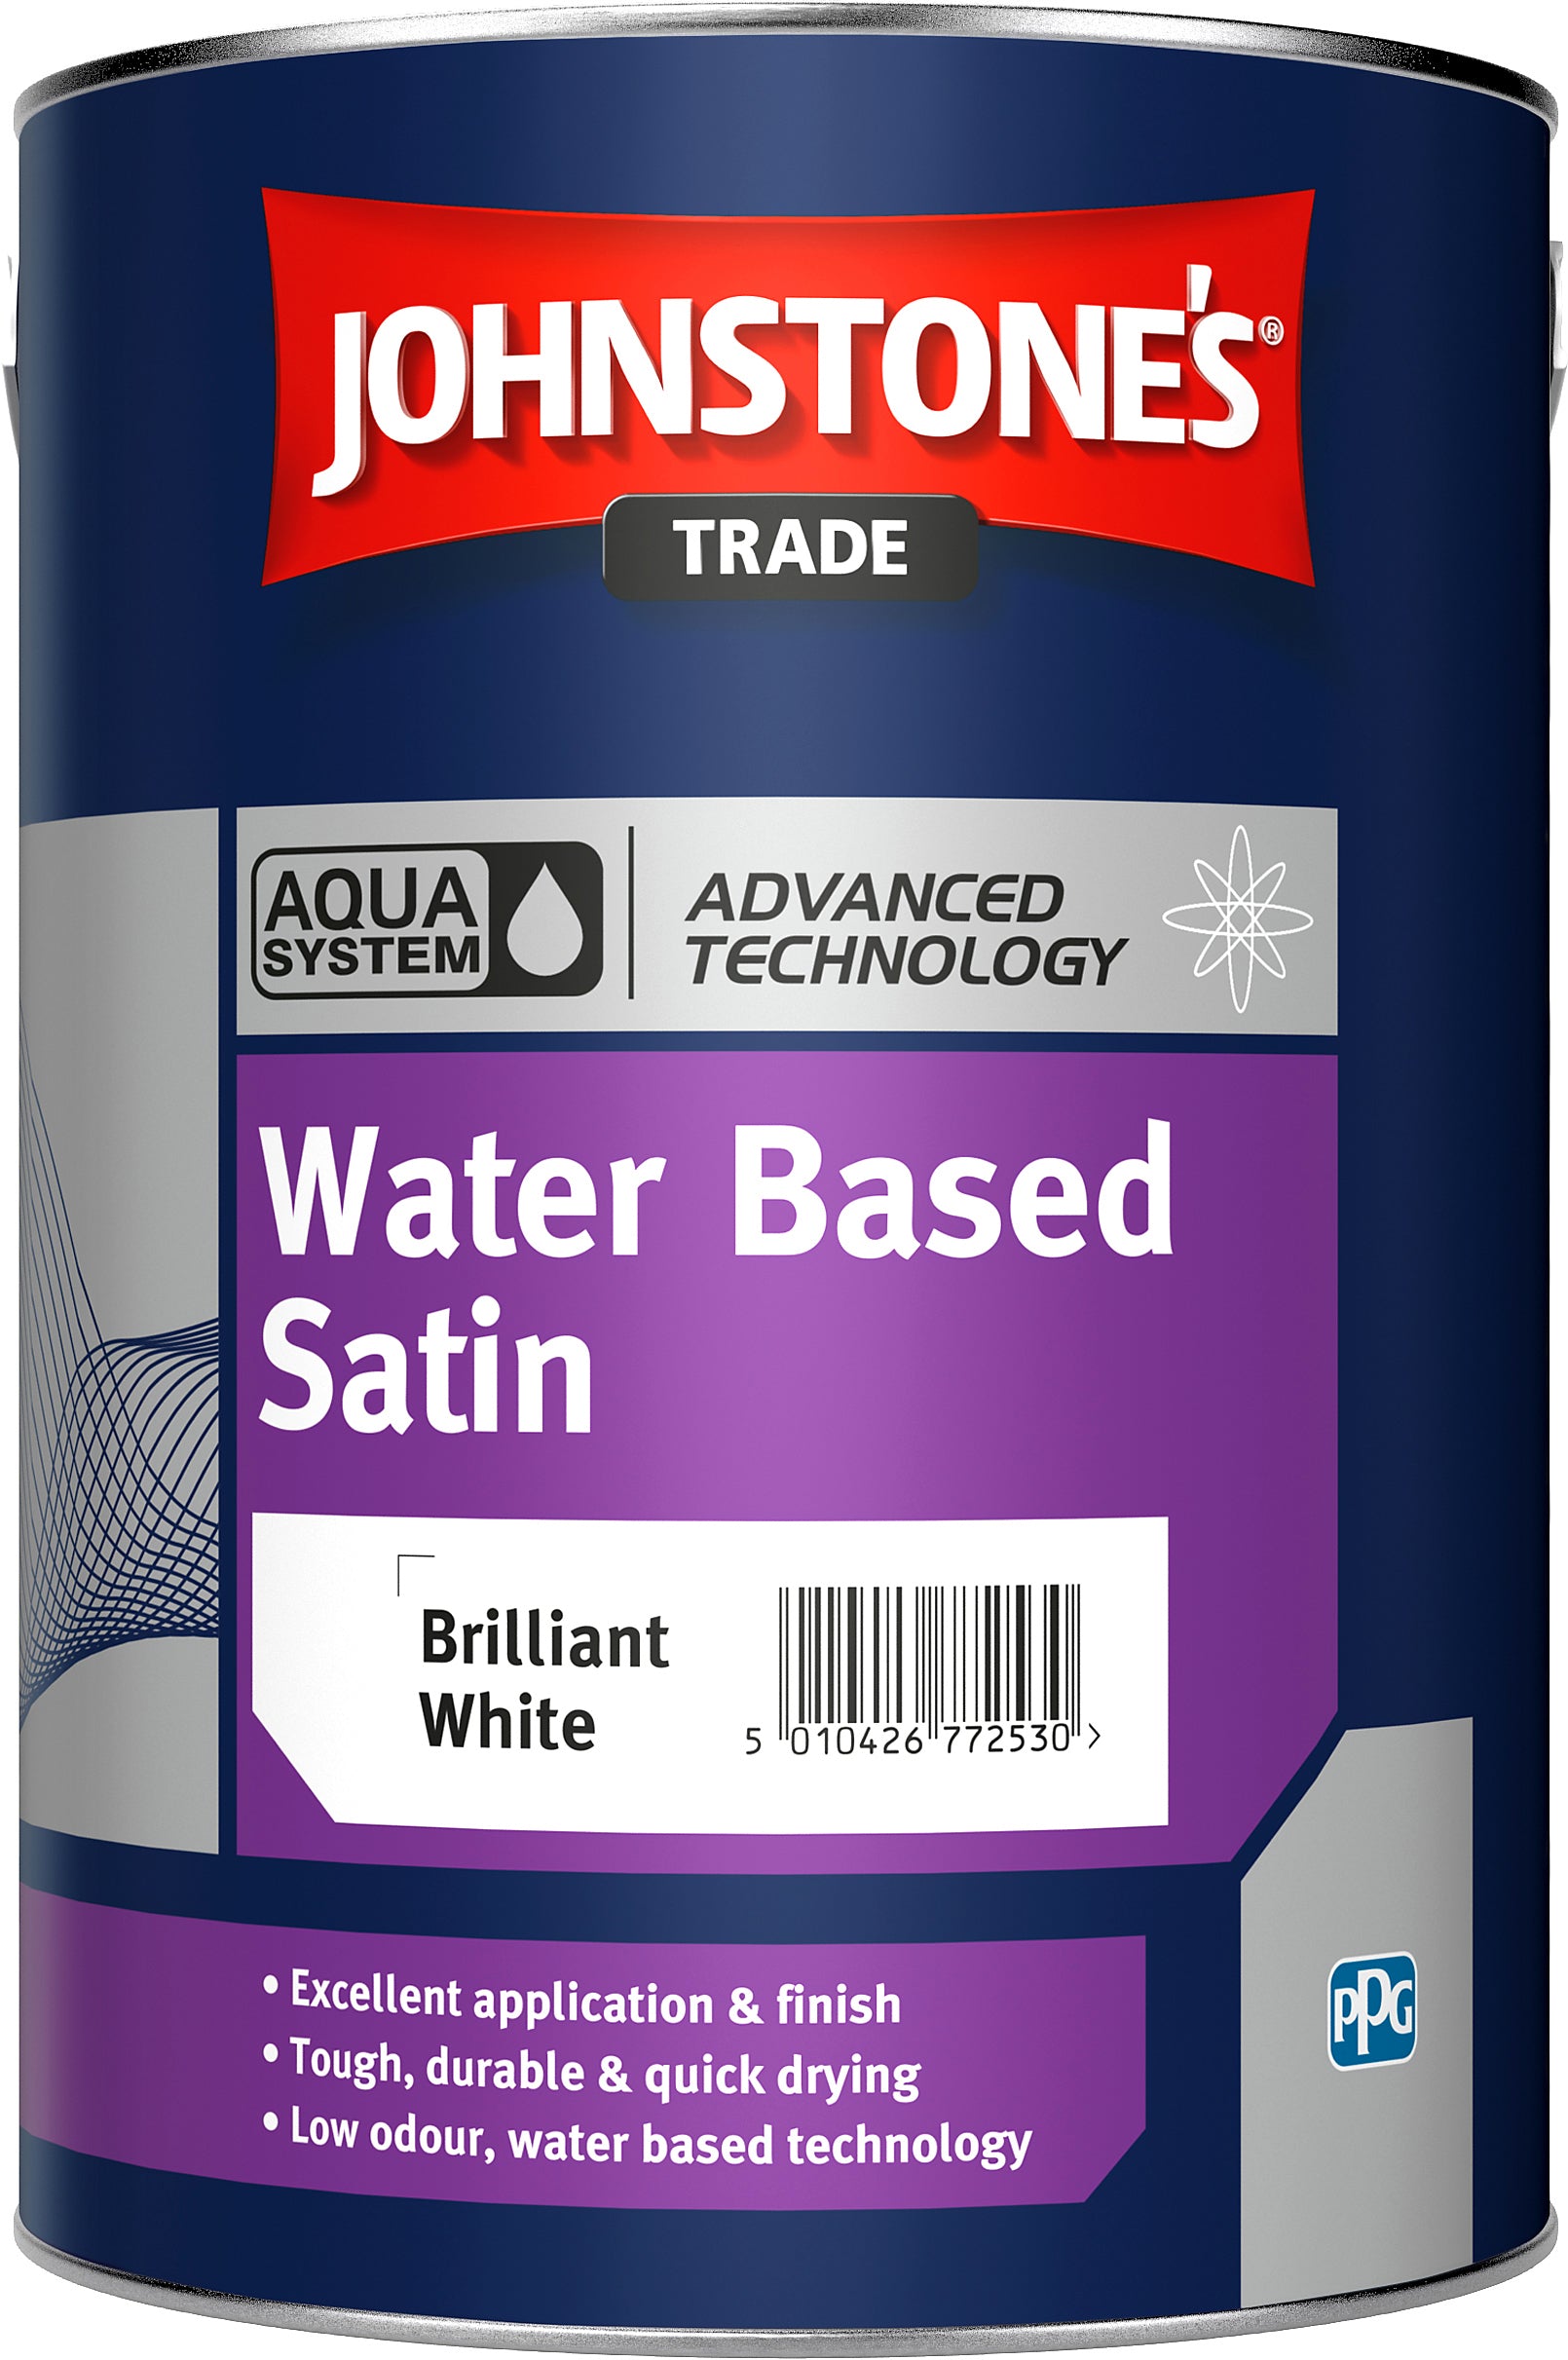 Johnstones Aqua Water Based Satin - Brilliant White